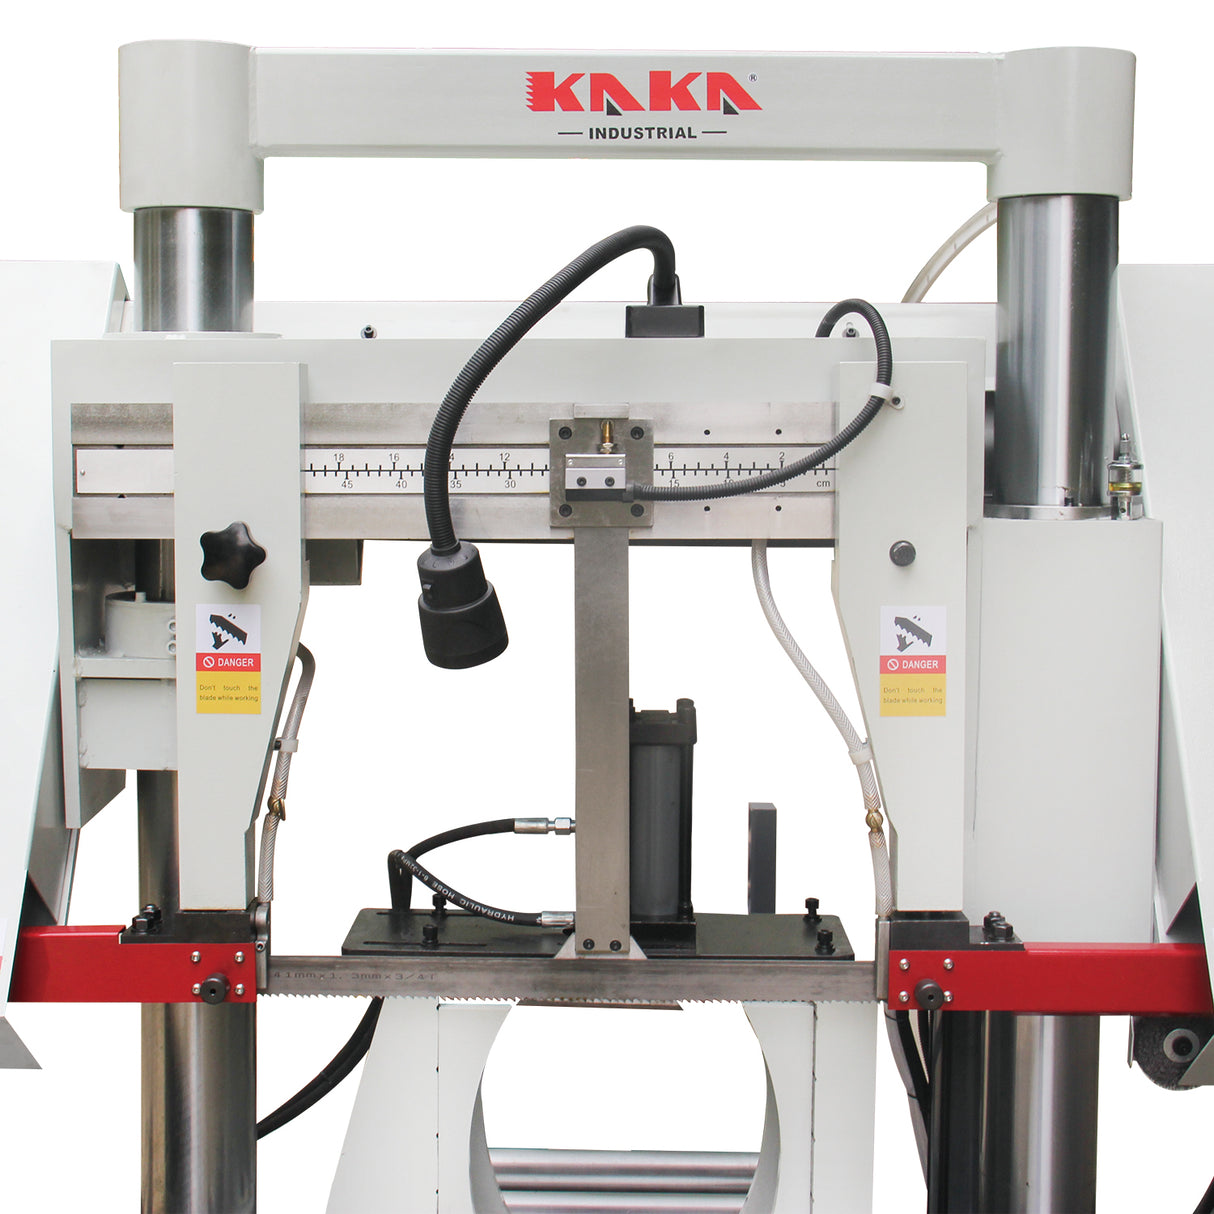 KANG Industrial TGK-16A, ø400mm-400x400mm Dual Column Bundle Cutting Saw, Hydraulic Band Saw Machine, 415V Power